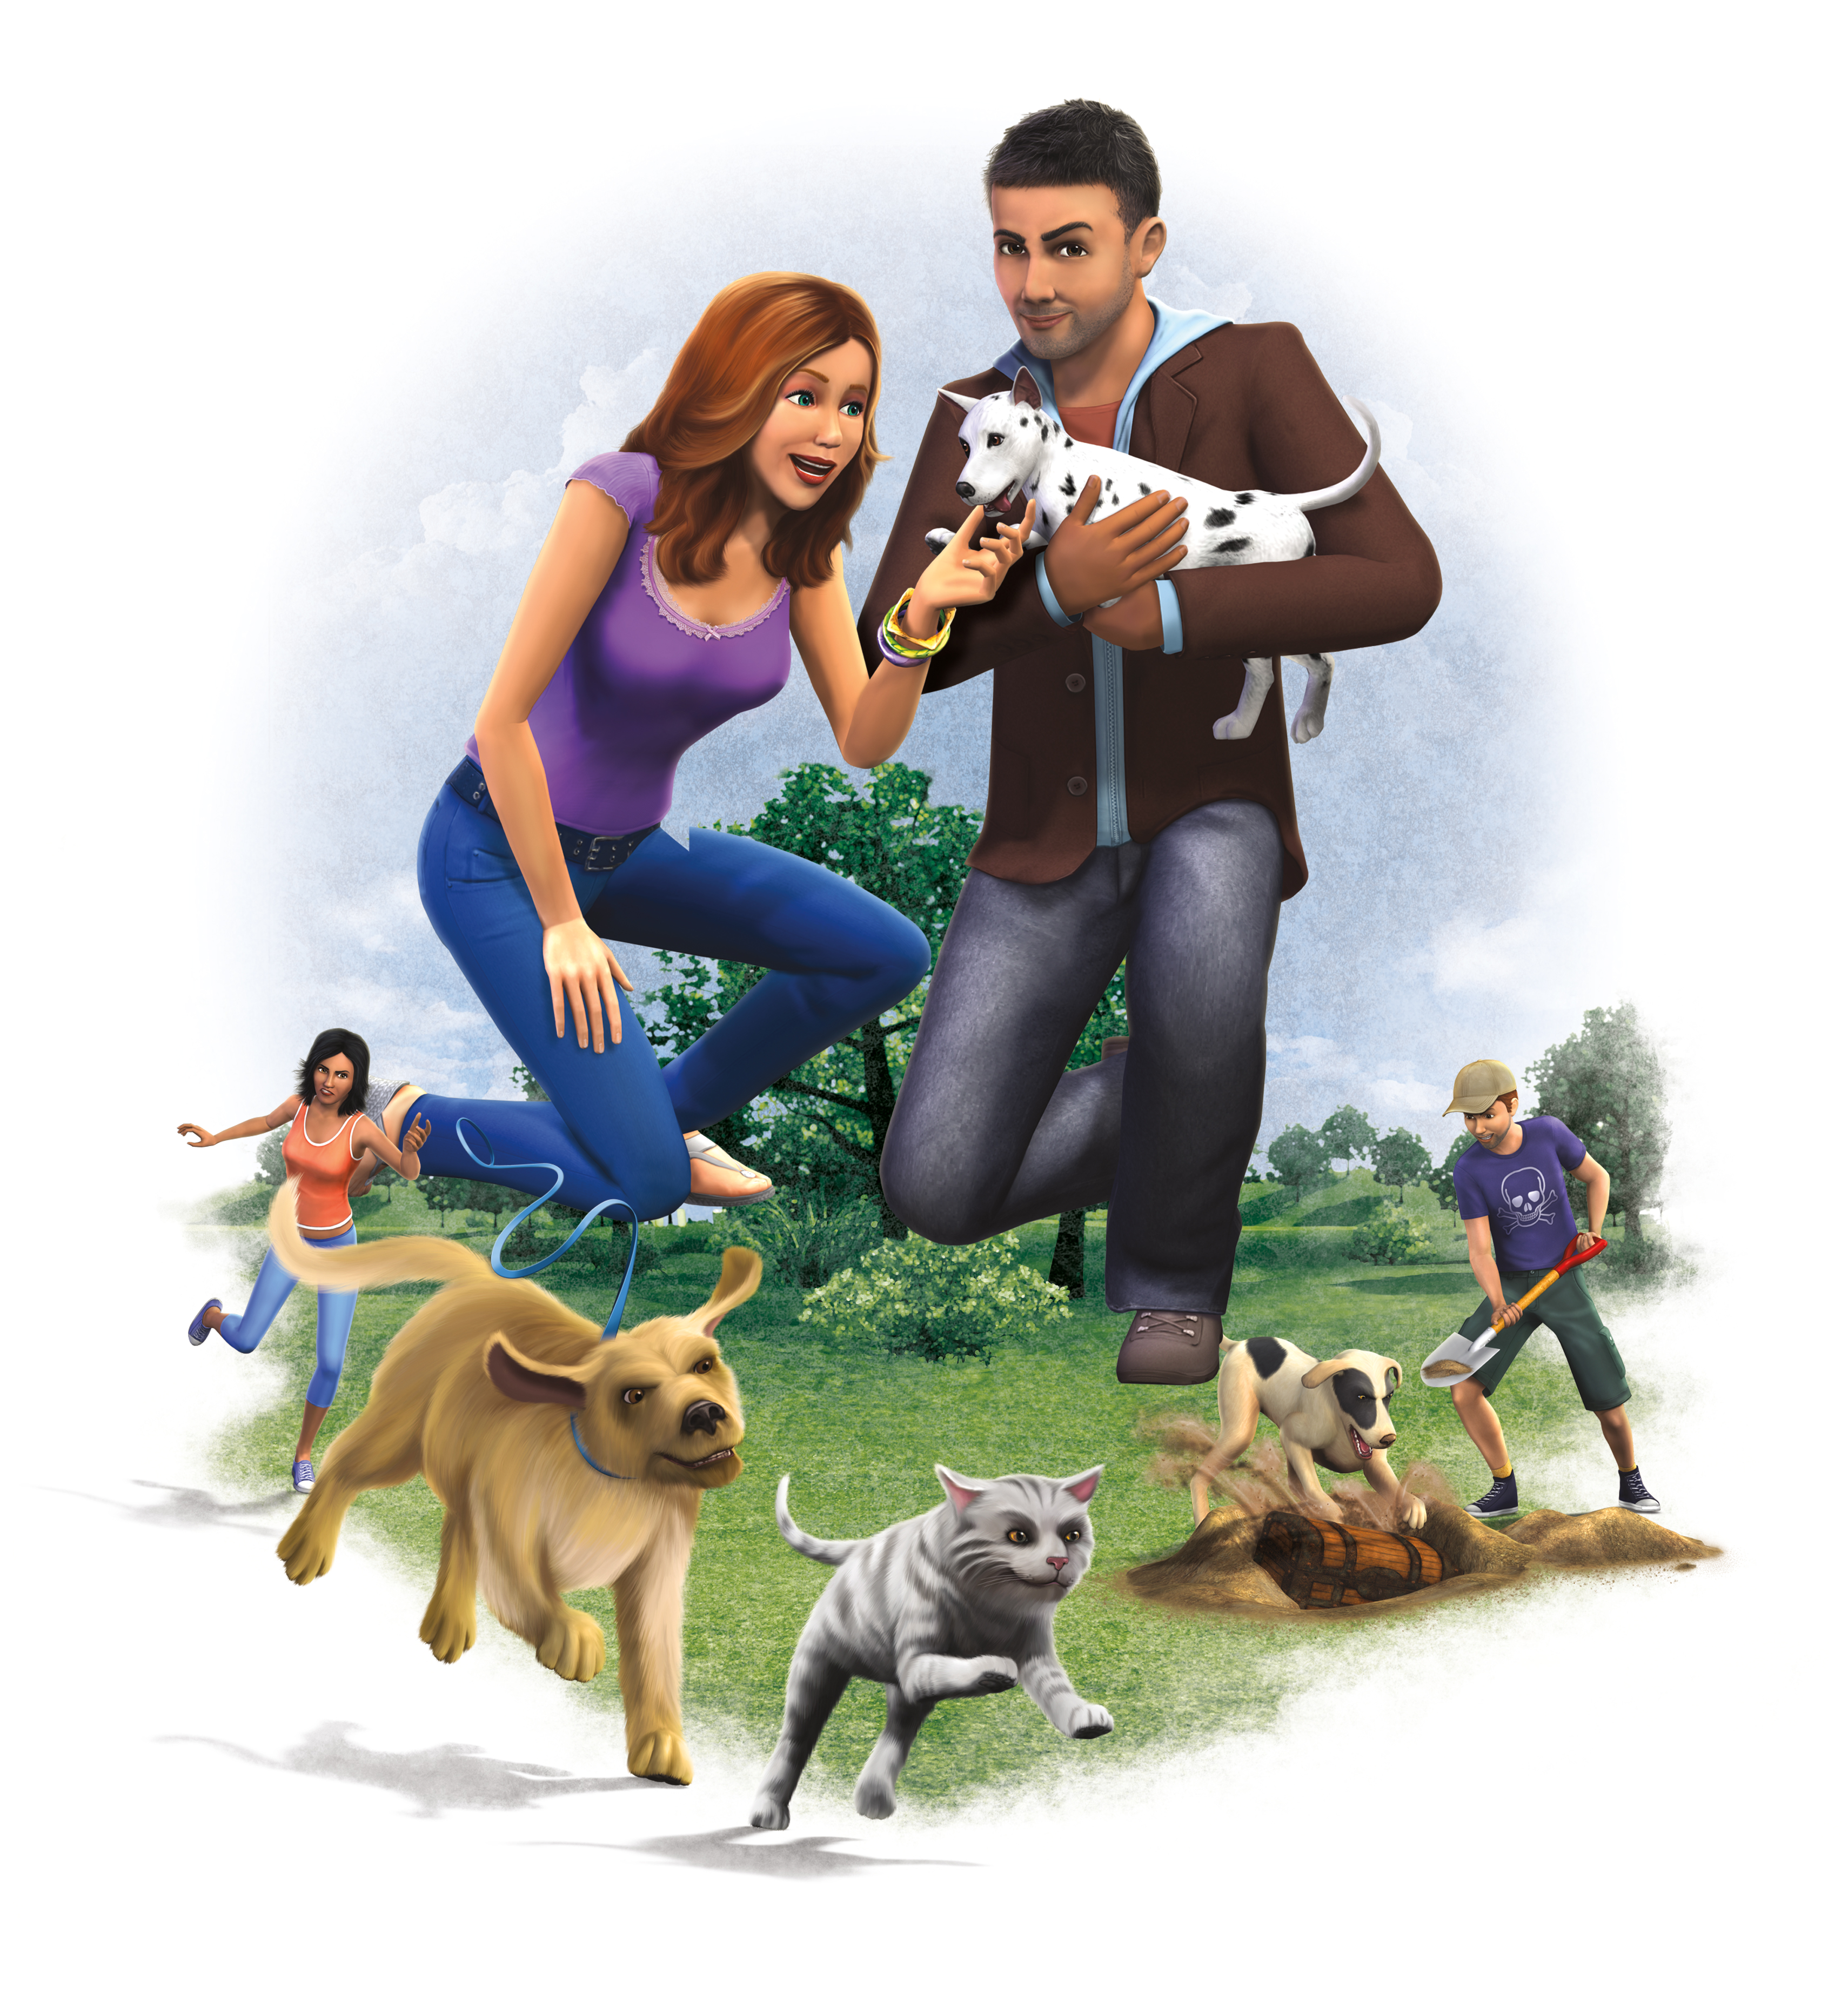 sims free play animals